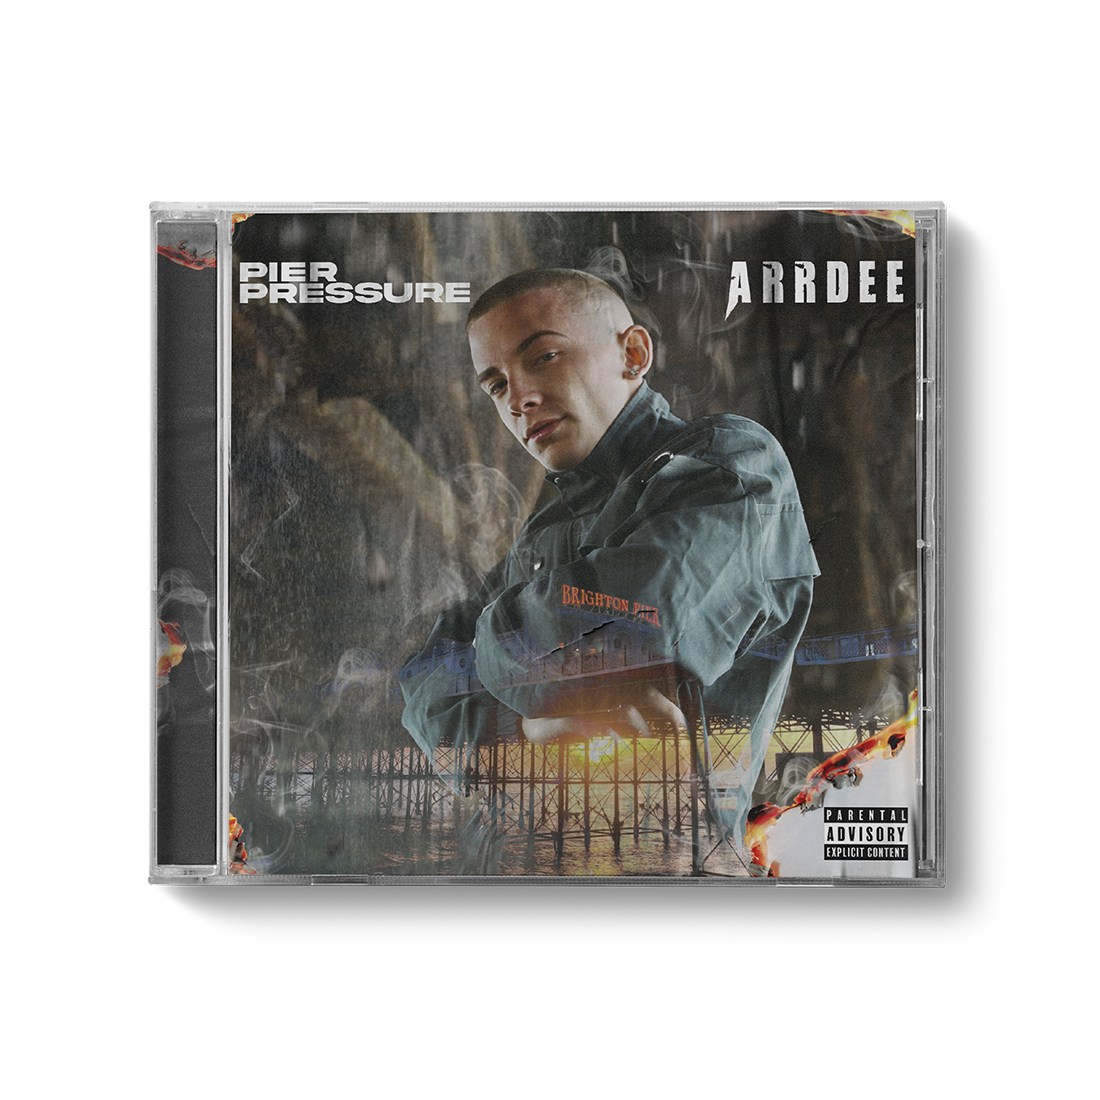 Arrdee - Pier Pressure CD